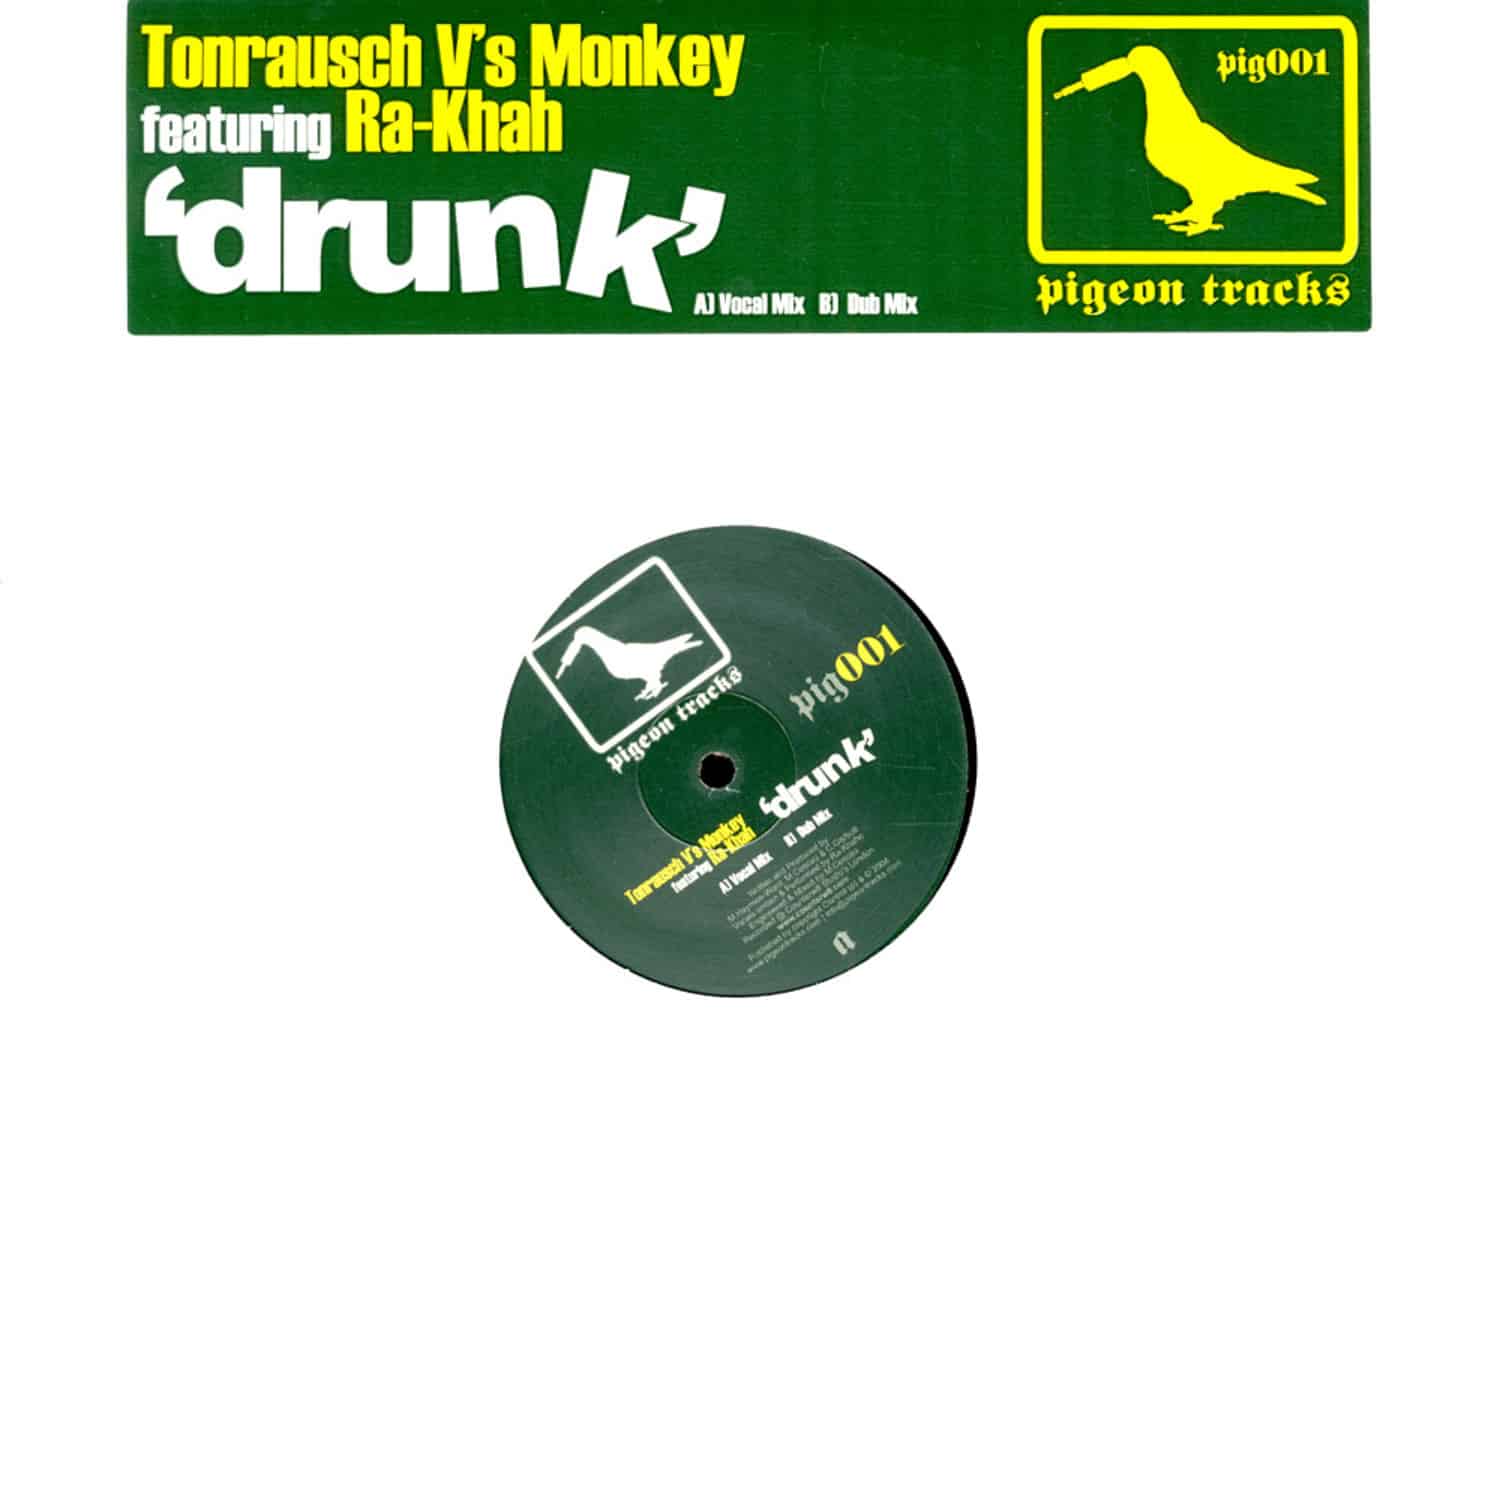 Tonrausch vs. Monkey - DRUNK